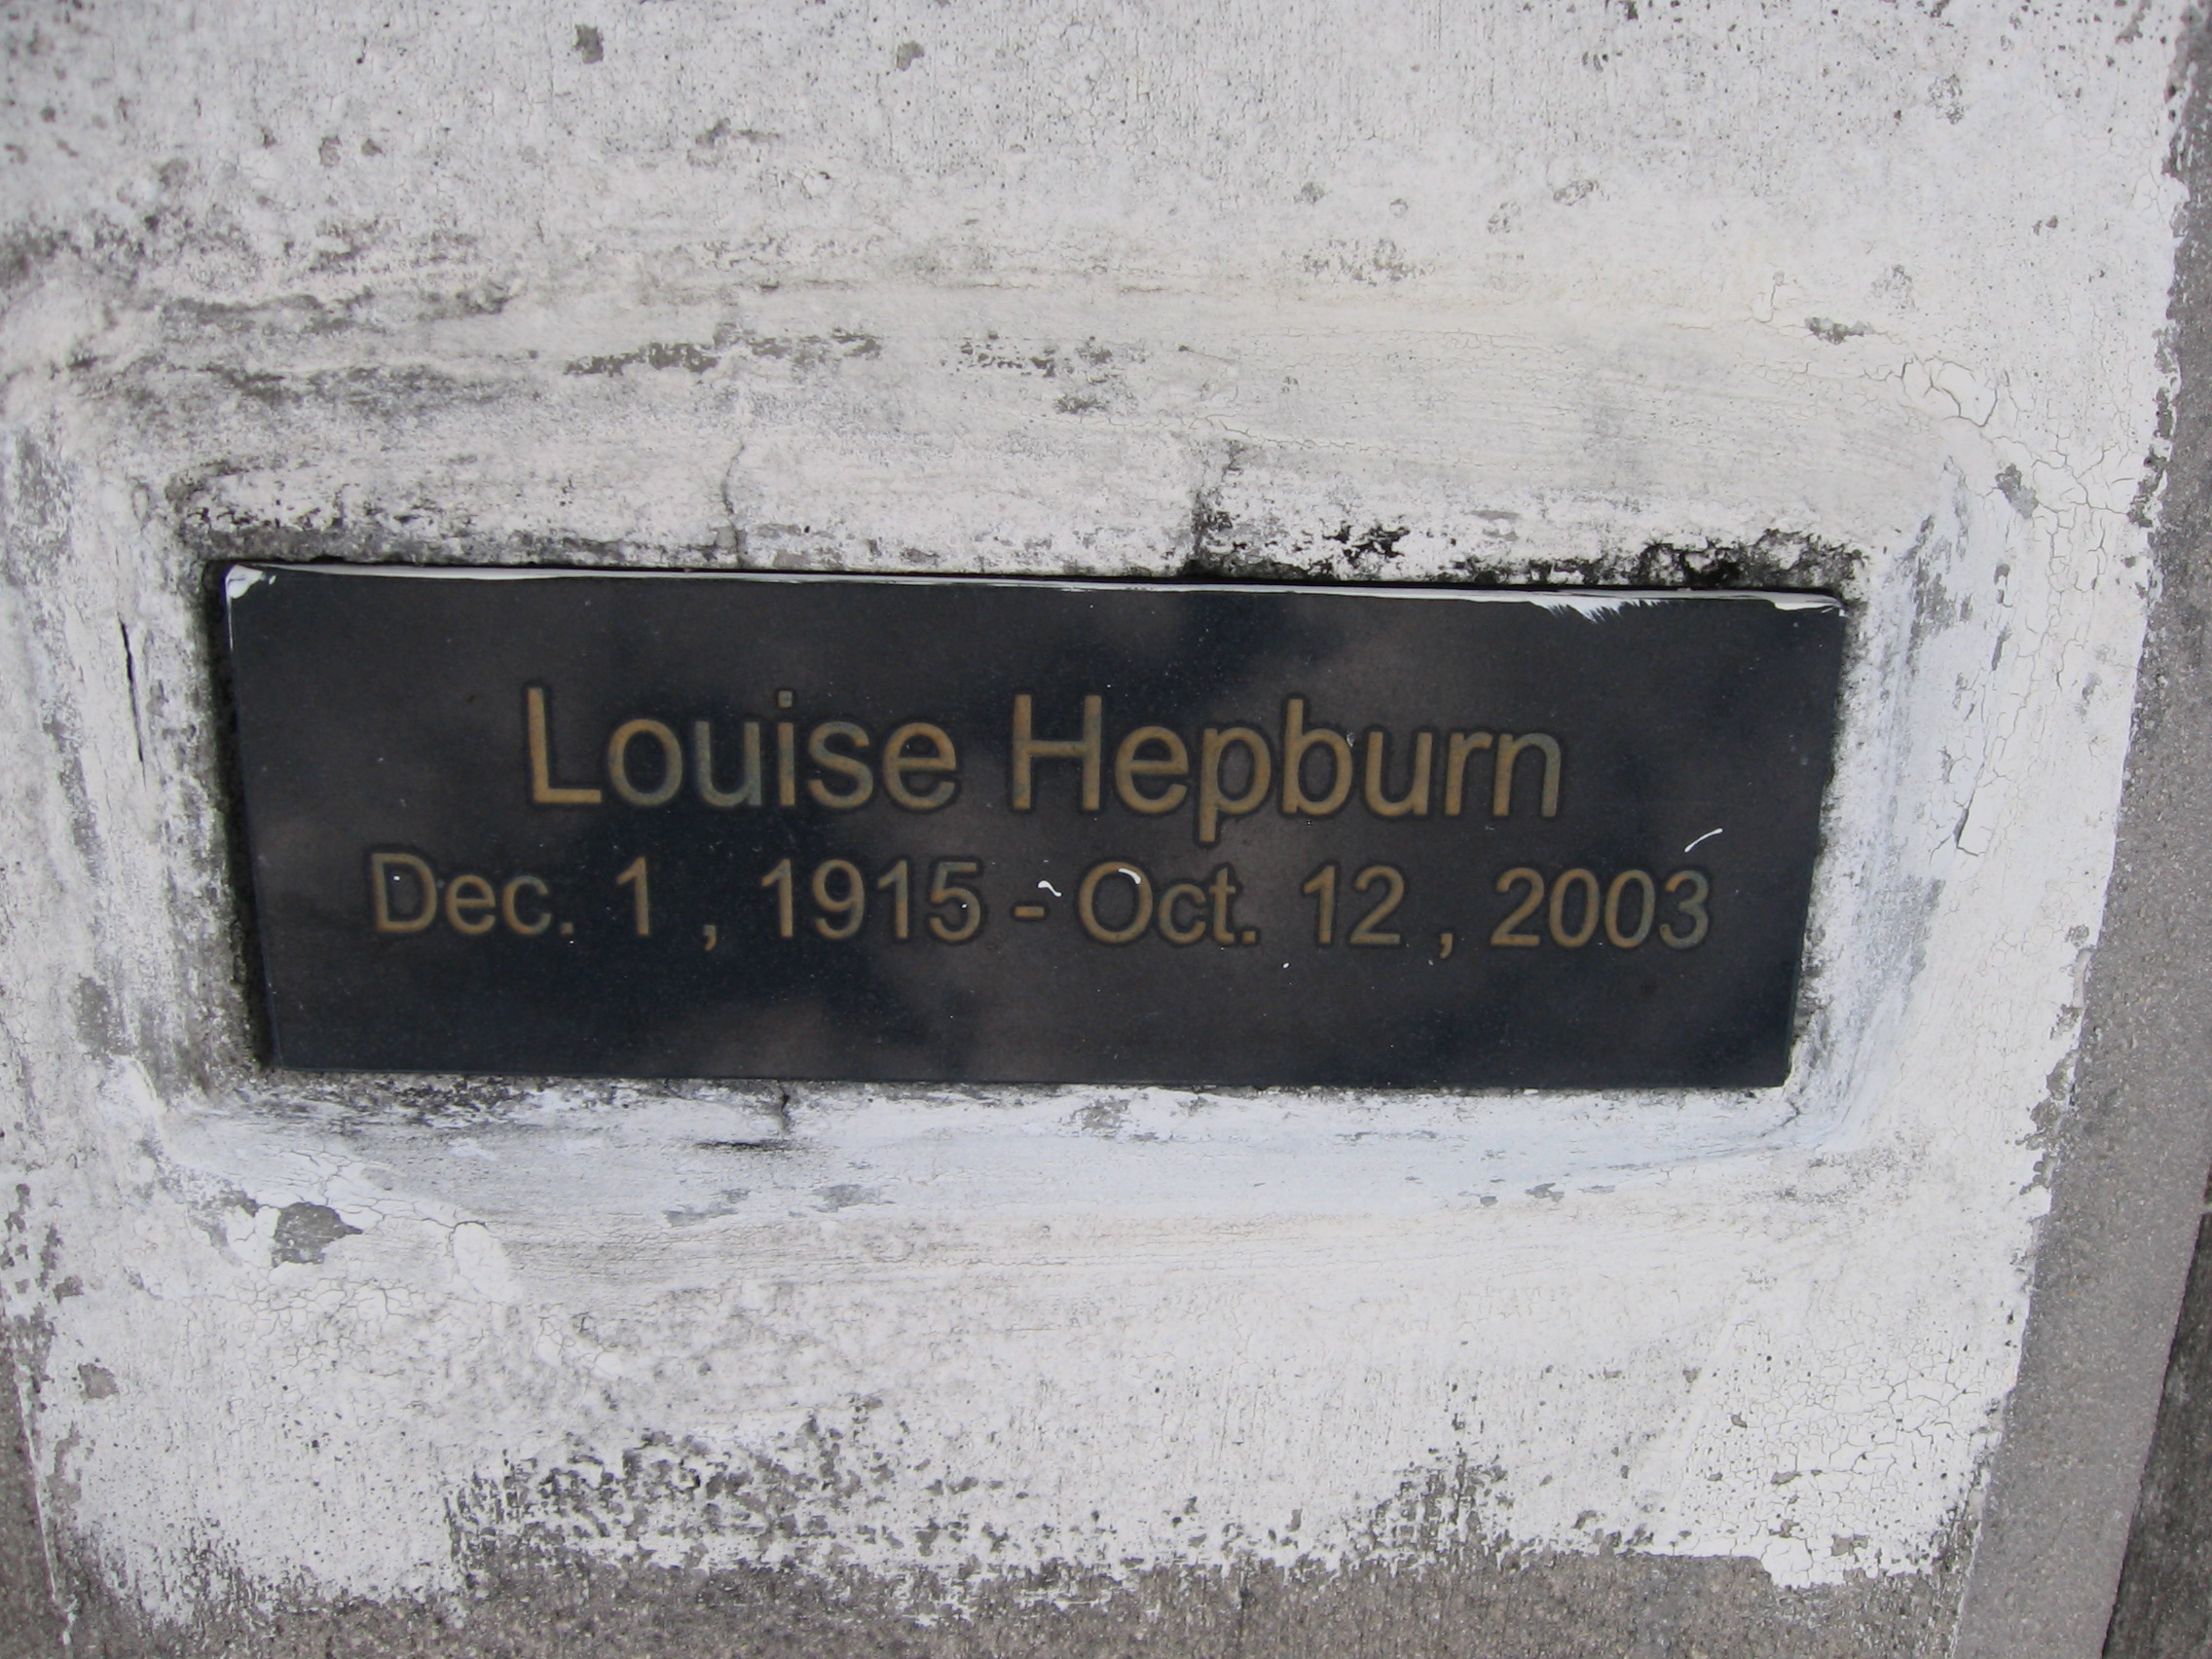 Louise Hepburn